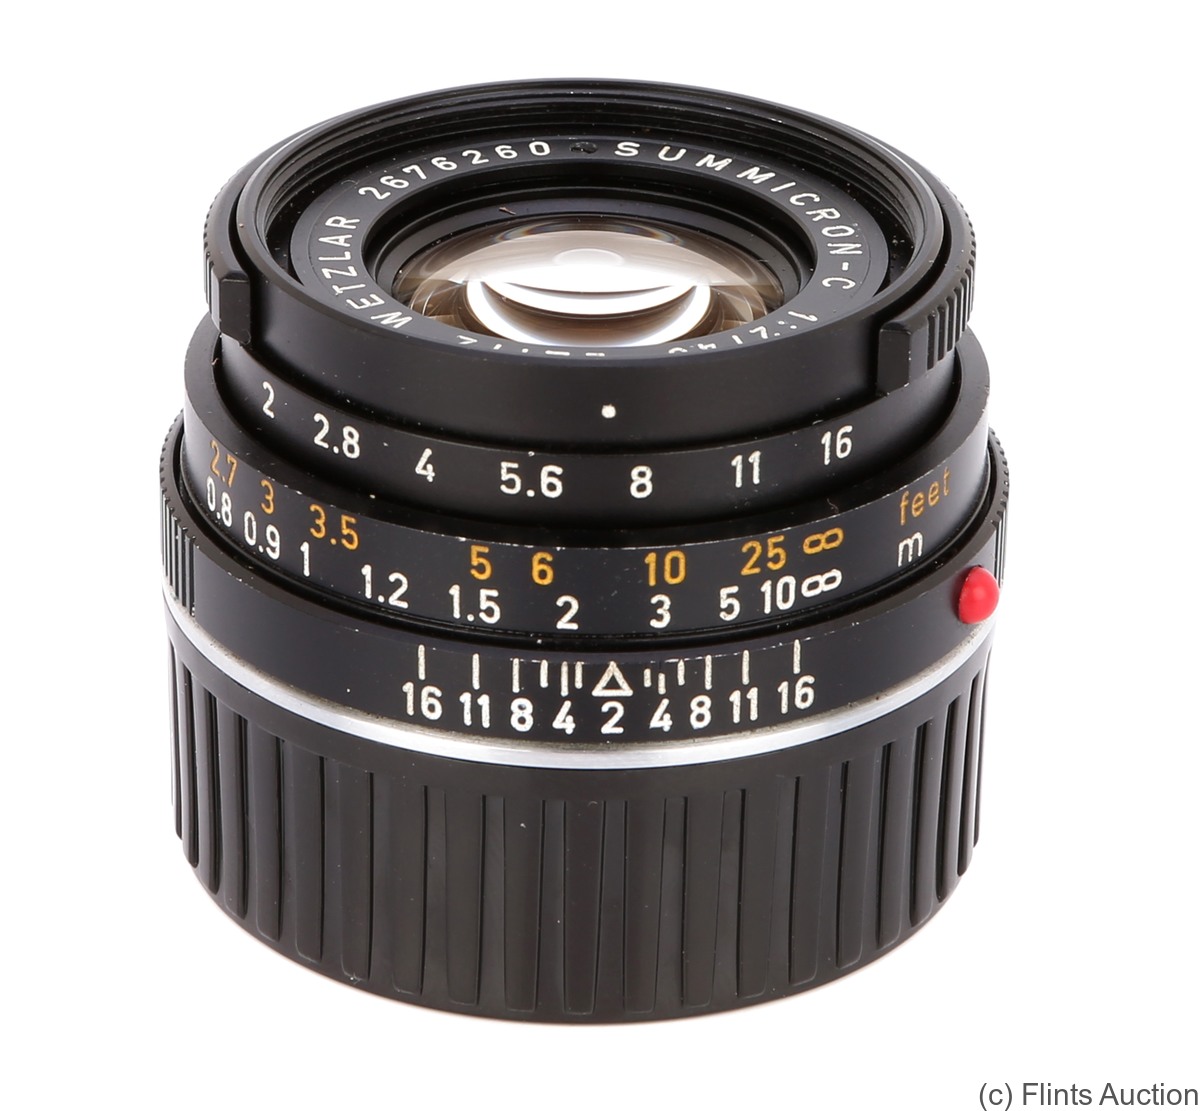 Leitz: 40mm (4cm) f2 Summicron-C (CL) camera